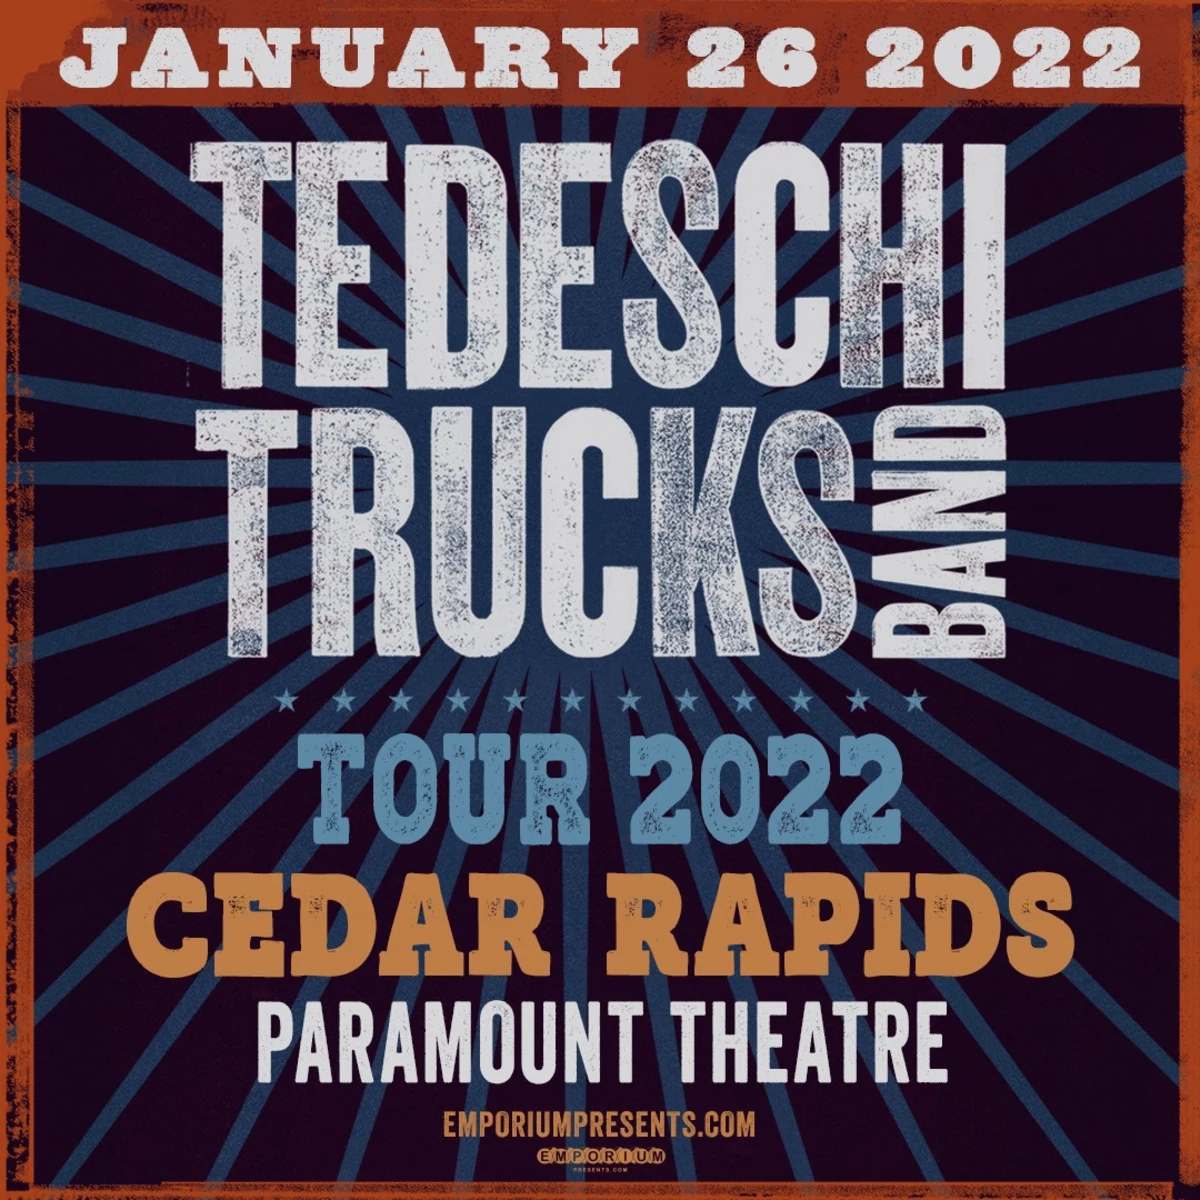 Tedeschi Trucks Band Paramount Theatre 